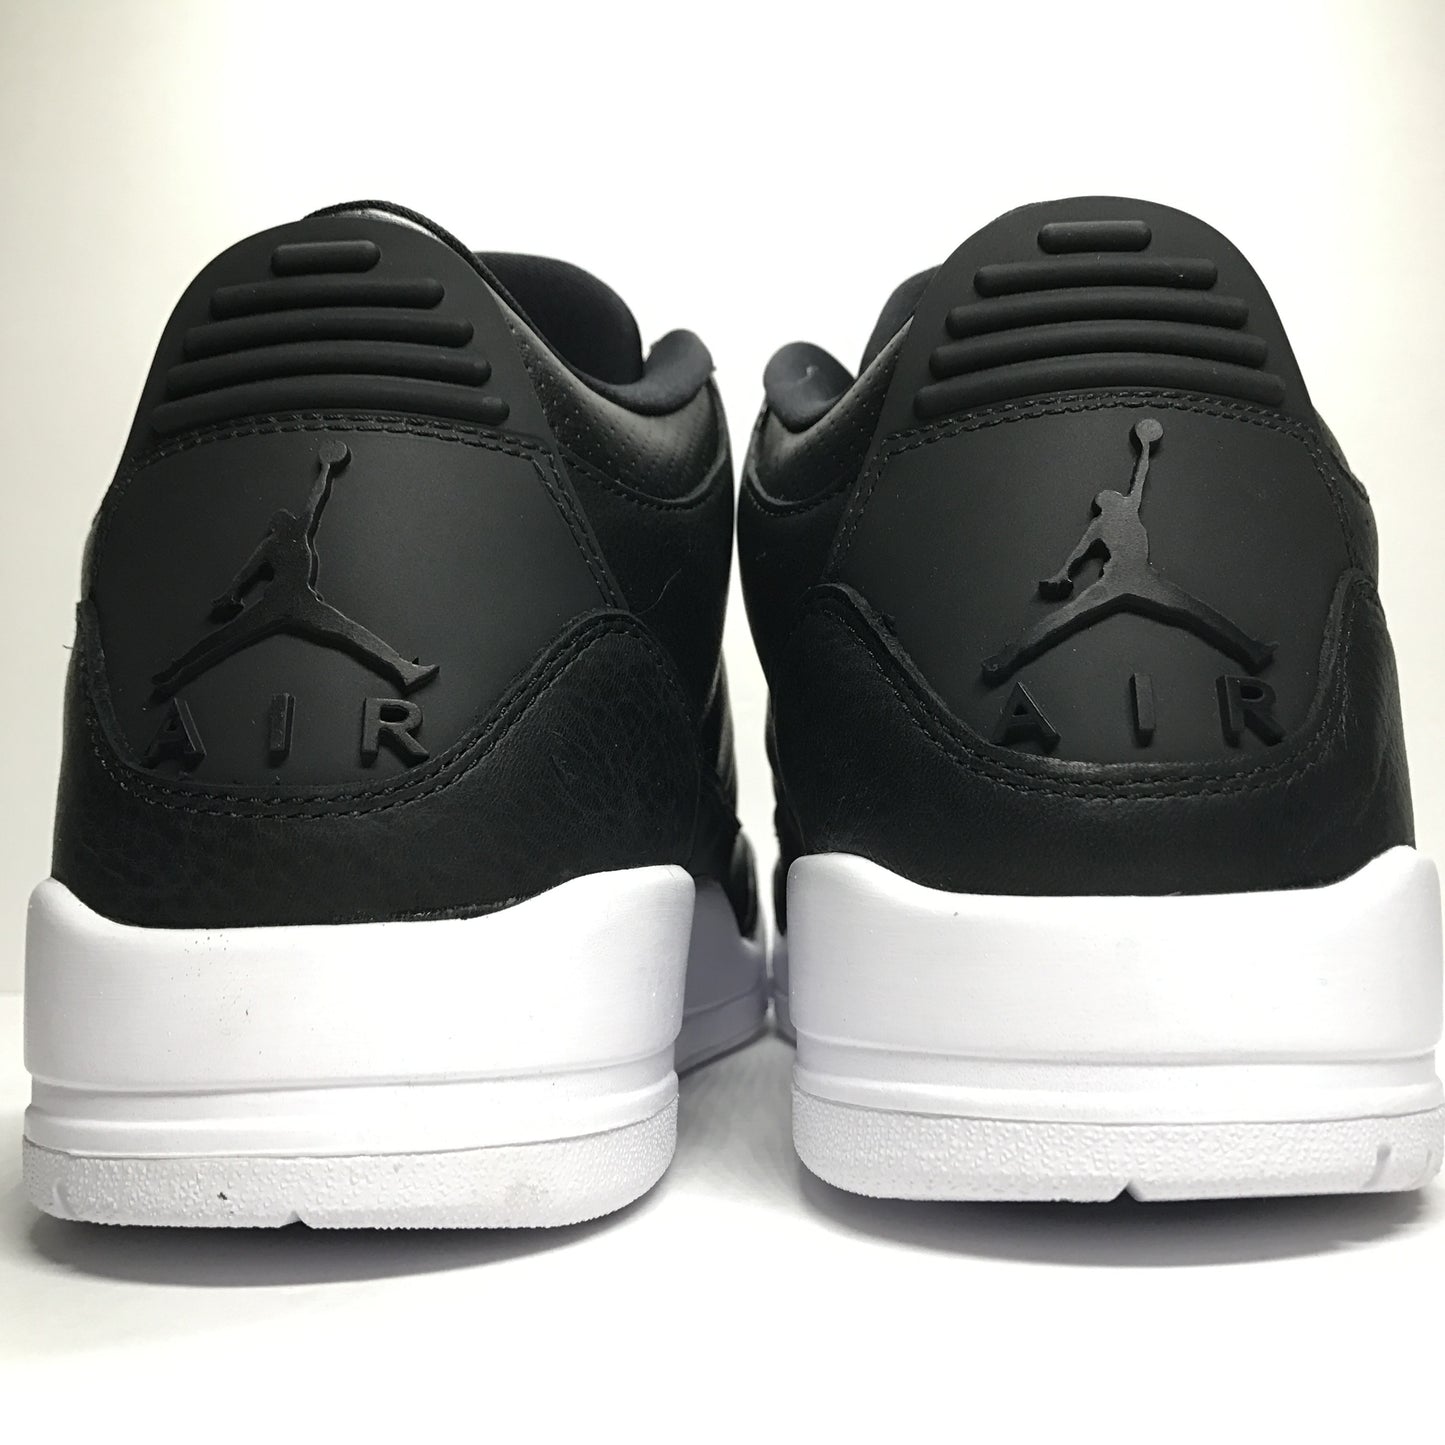 DS Nike Air Jordan 3 III Retro Cyber Monday Size 8.5/Size 11/Size 12